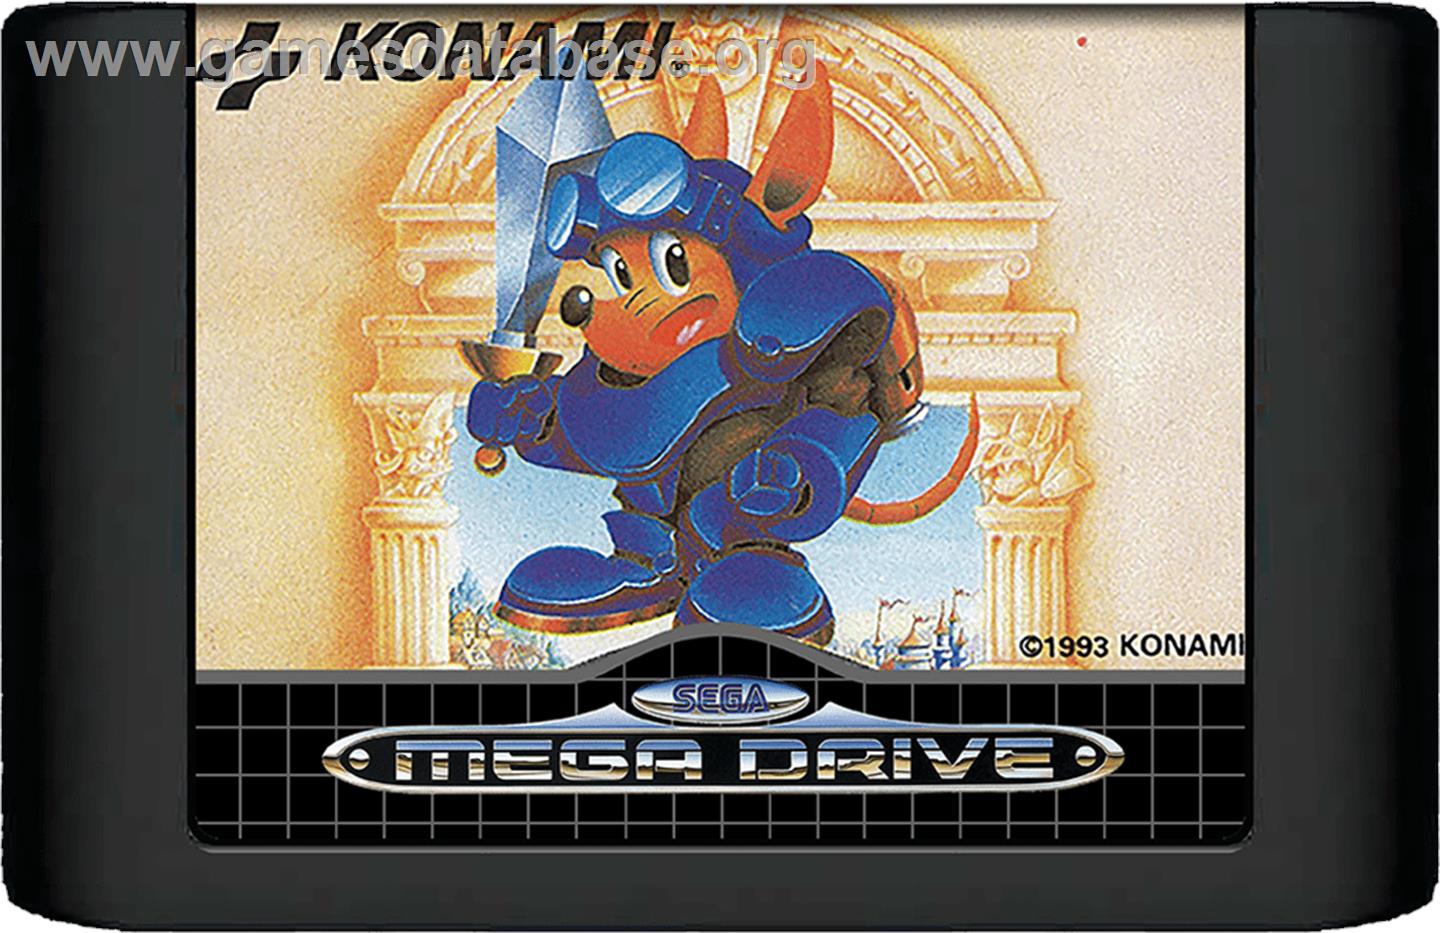 Rocket Knight Adventures - Sega Genesis - Artwork - Cartridge